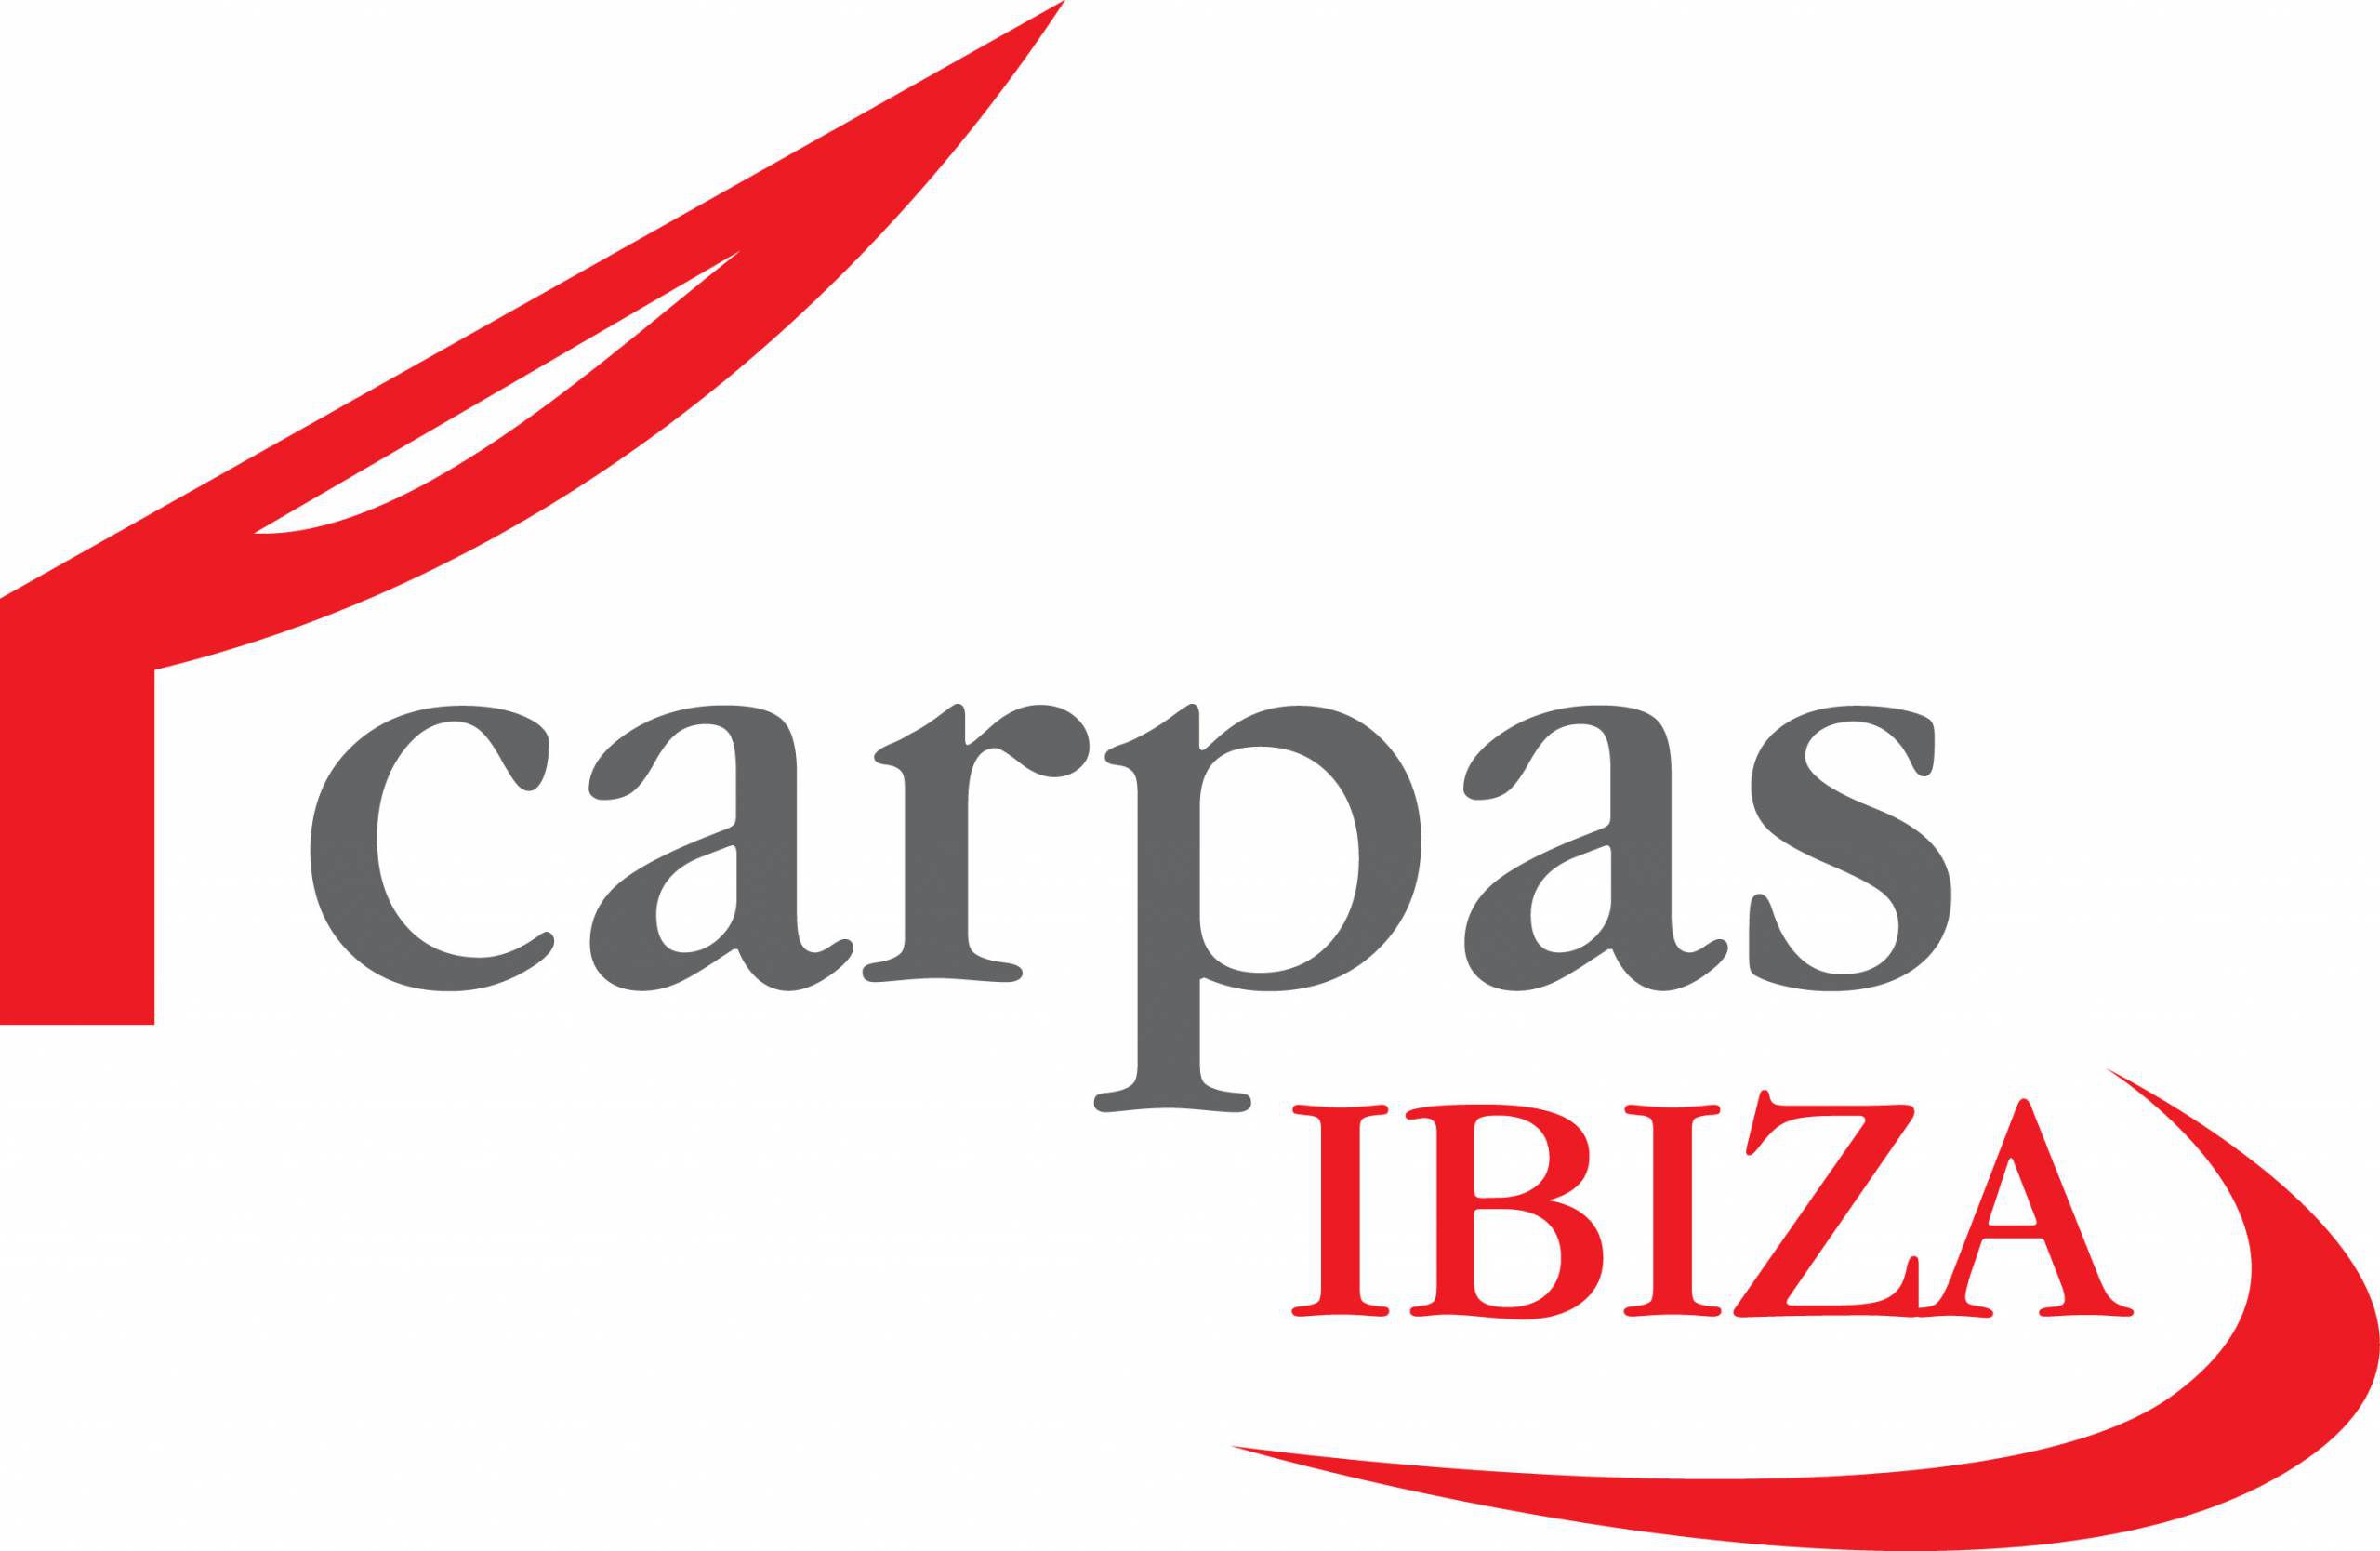 Carpas Ibiza